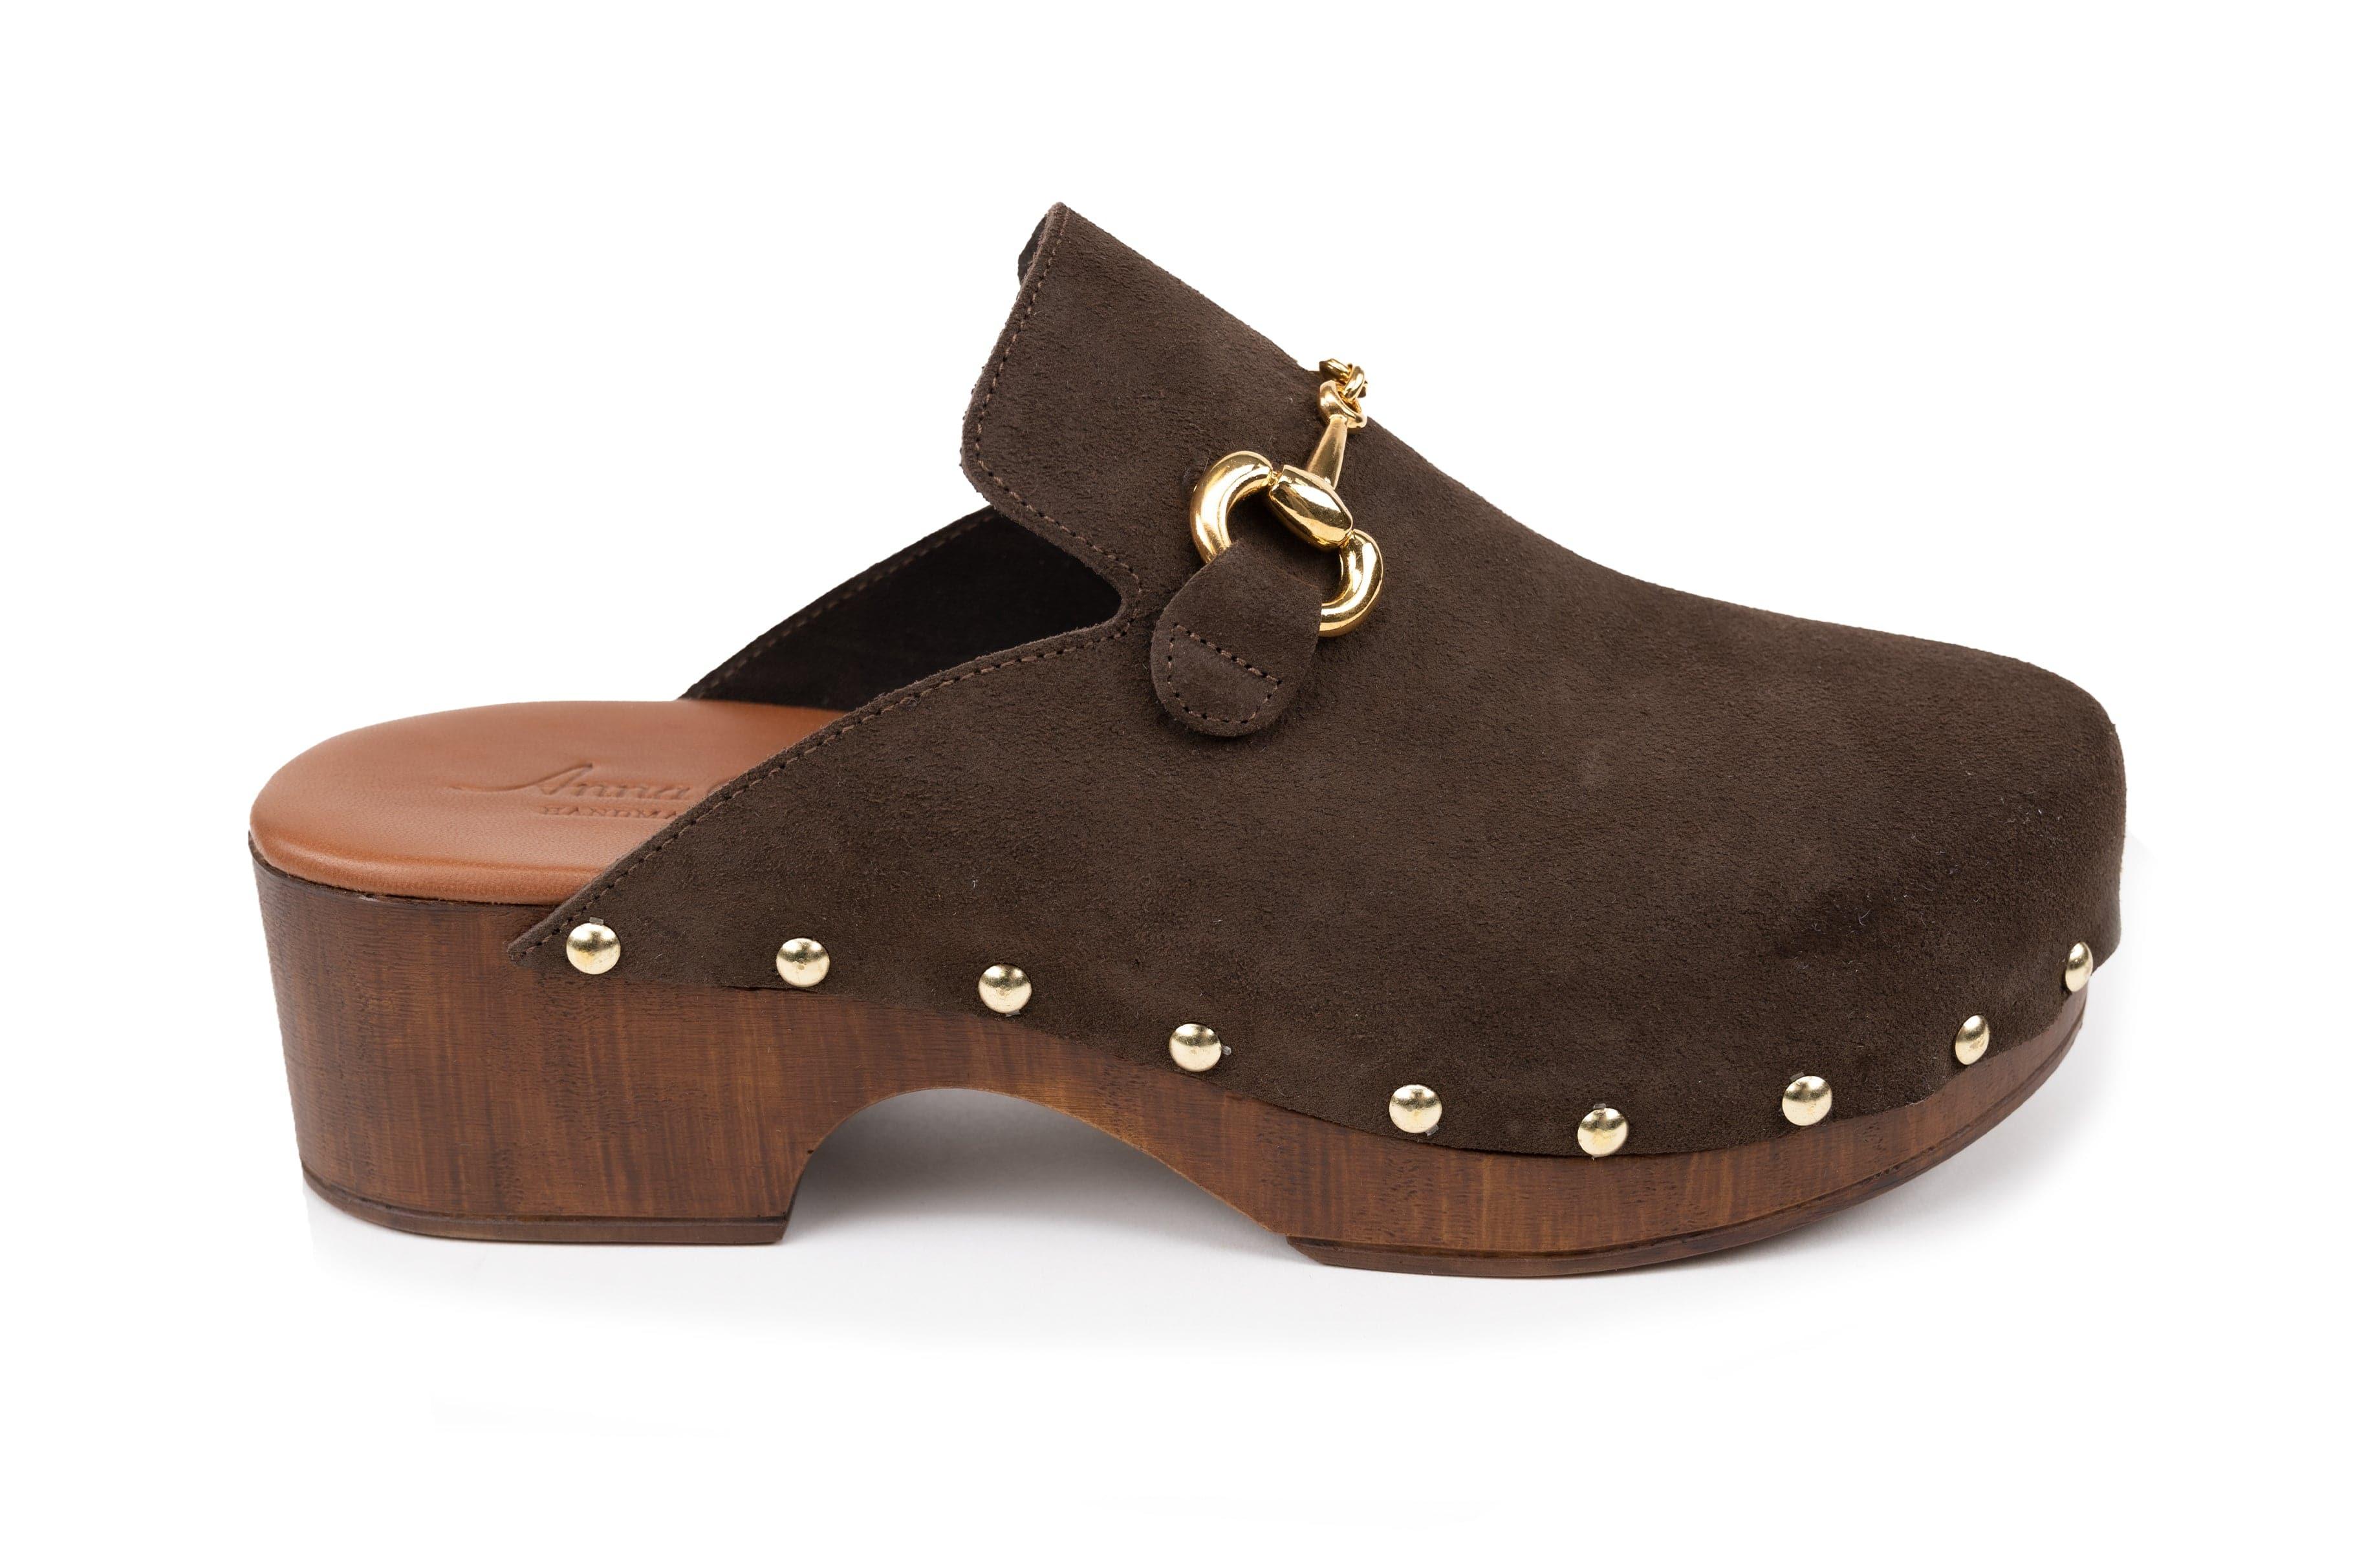 Gianna - Italian Leather Clogs with Chain - Italian Shoemakers